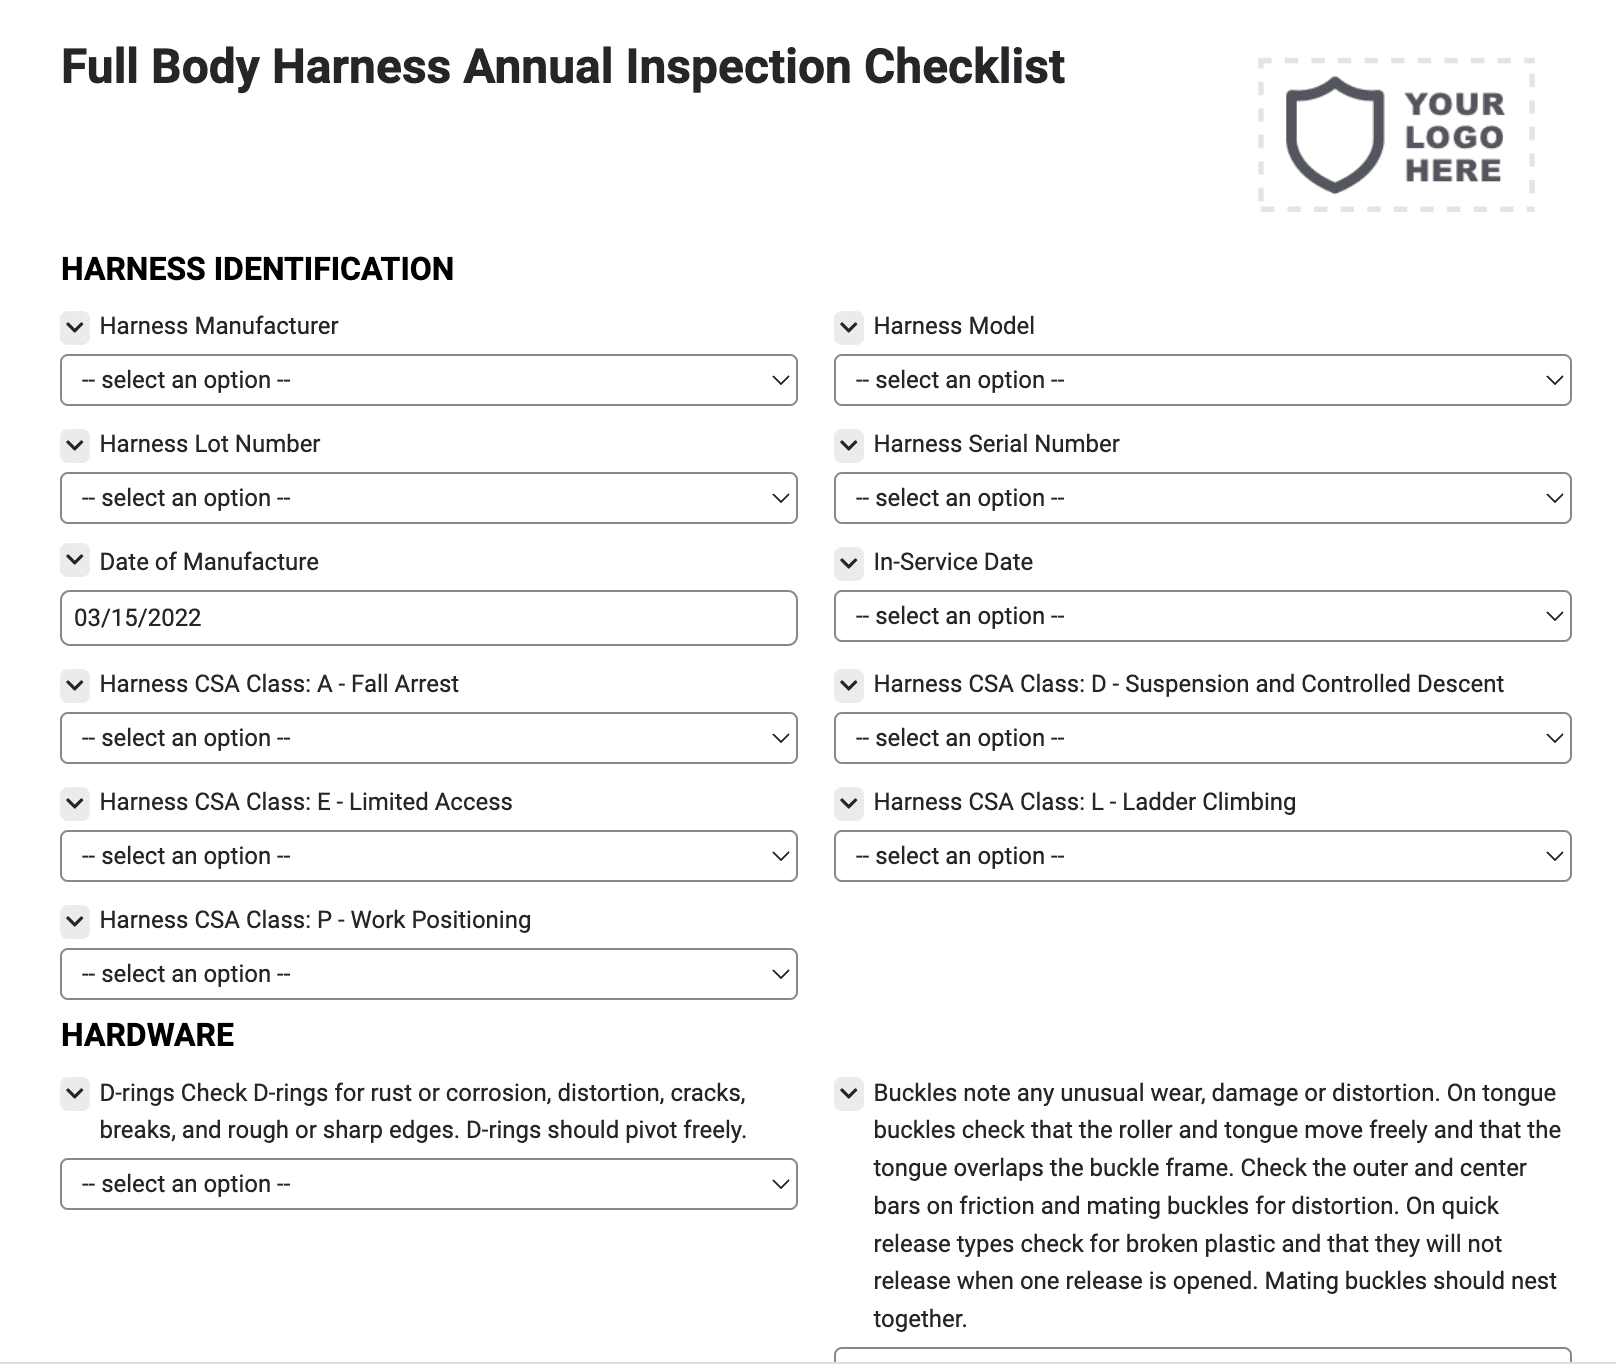 Full Body Harness Annual Inspection Checklist